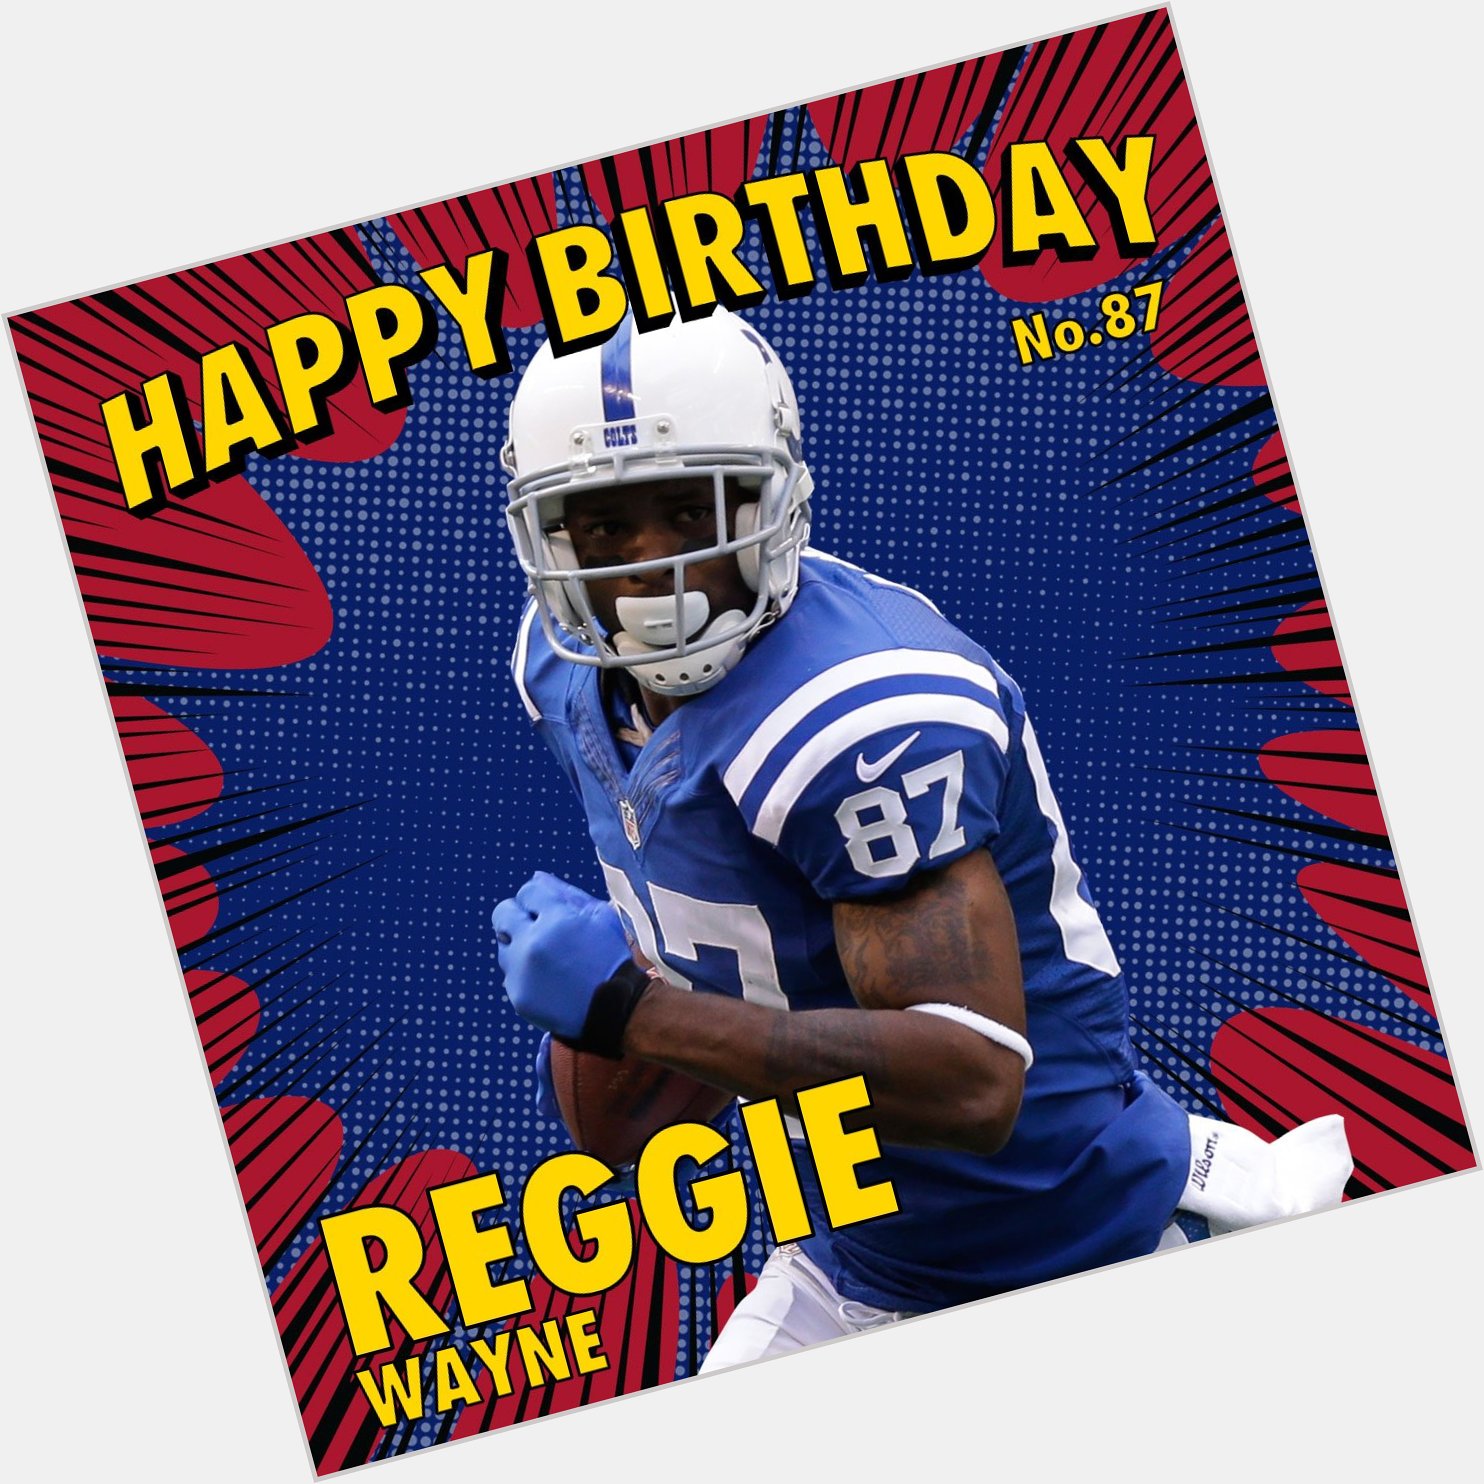 Join us in wishing Reggie Wayne a Happy 37th Birthday! 